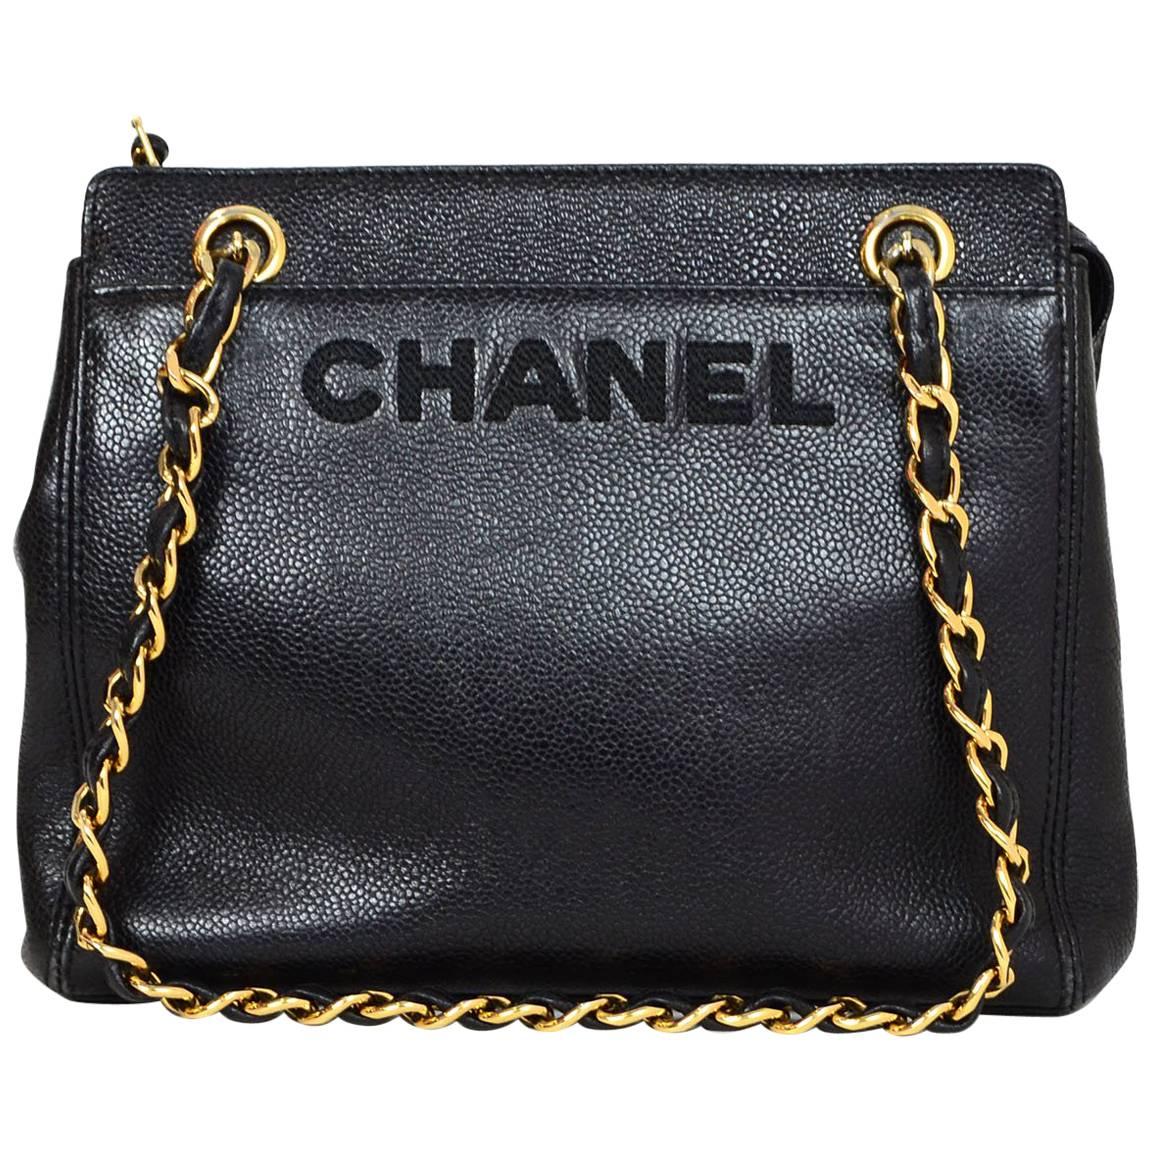 Chanel Vintage Black Caviar Leather CHANEL Logo Tote Bag